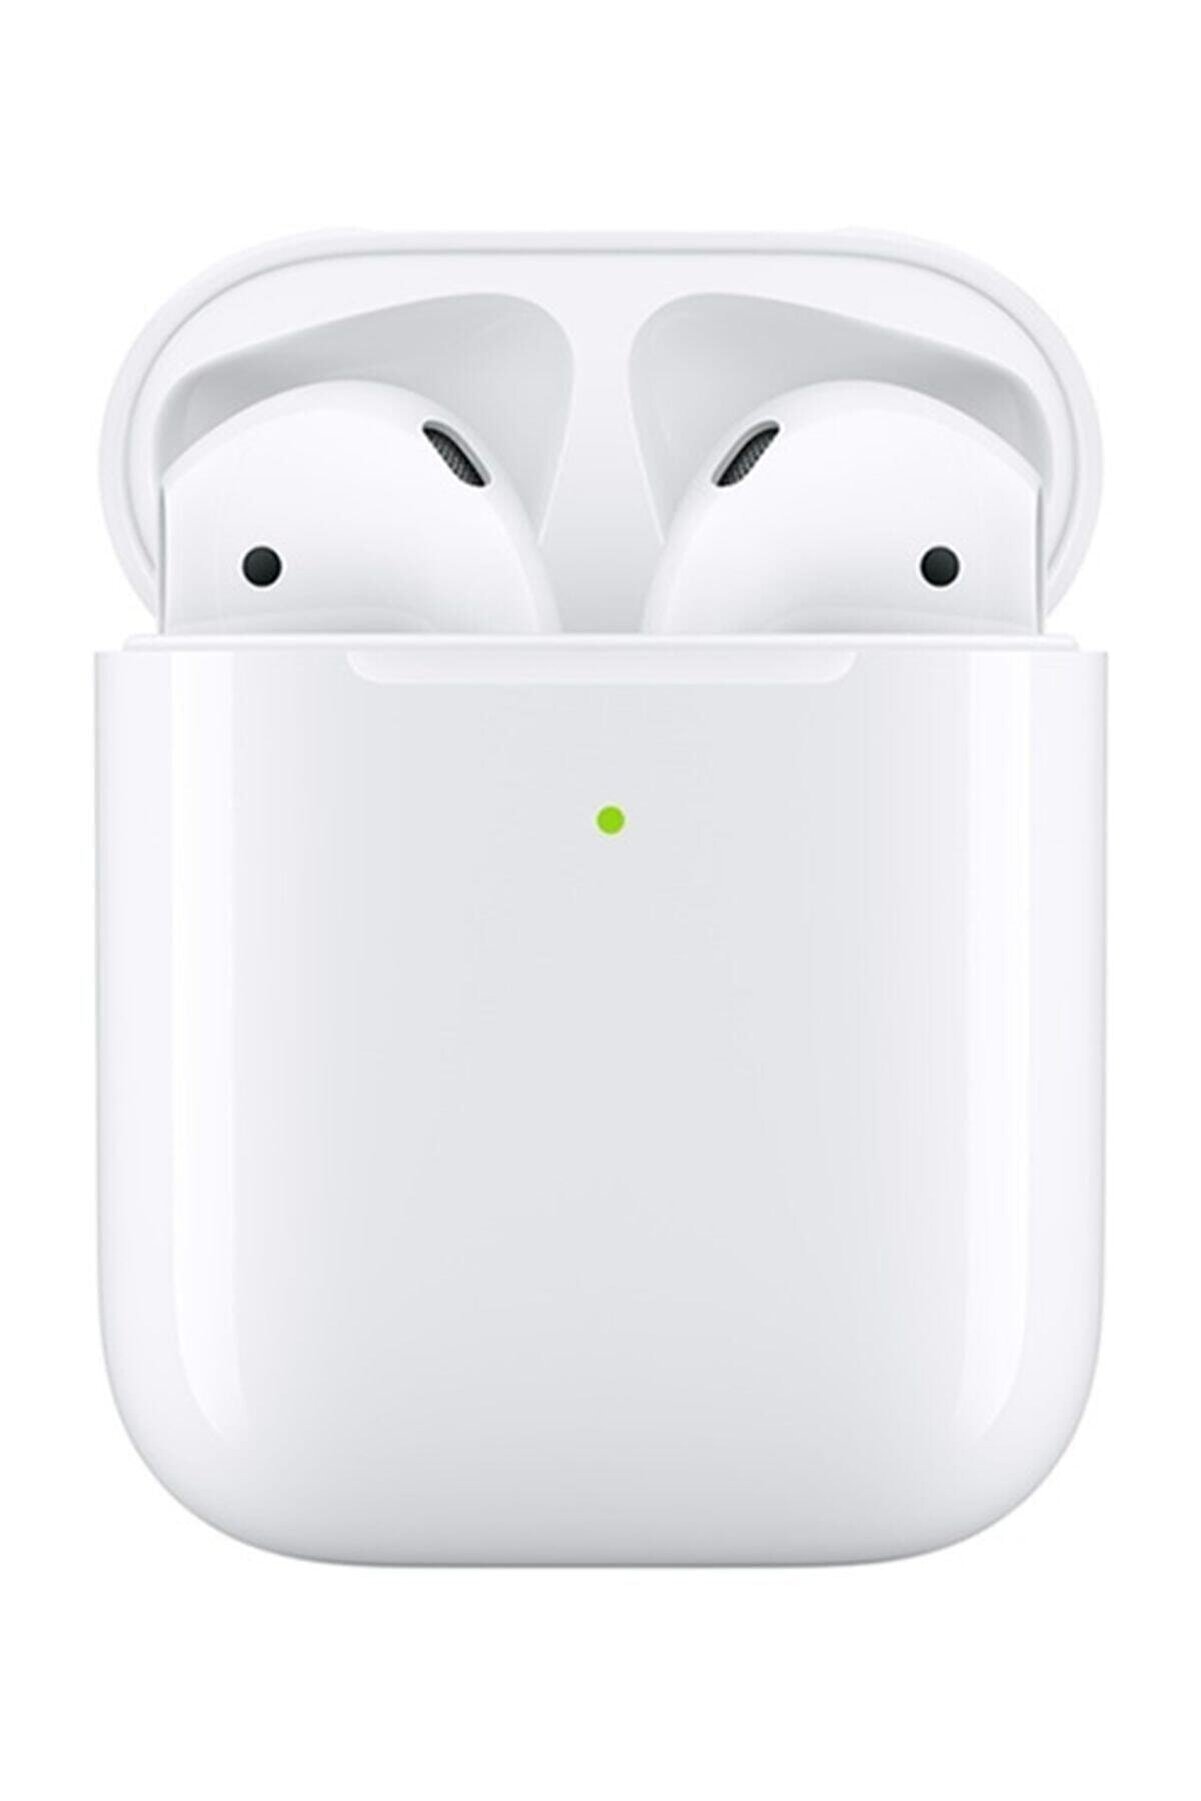 hotkey Beyaz Airpods 2.nesil Iphone-android Uyumlu Bluetooth Kulaklık